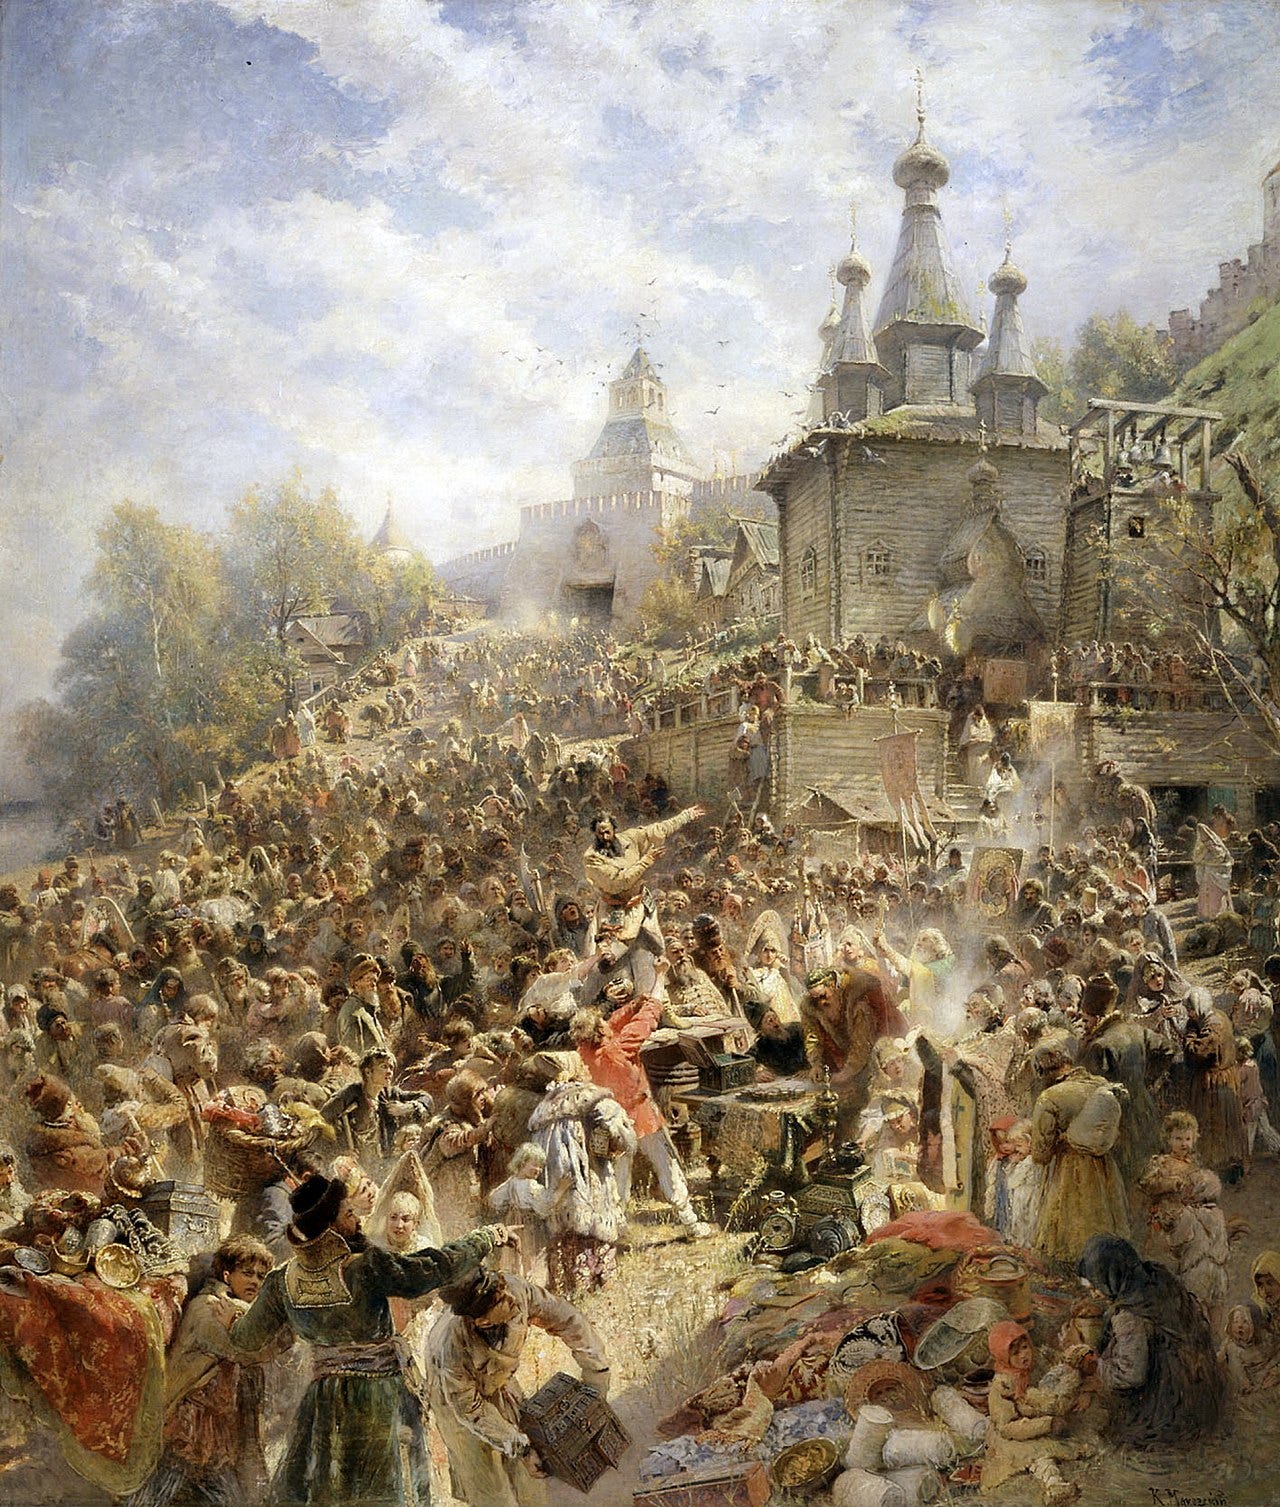 Painting of Kuzma Minin addressing a large crowd